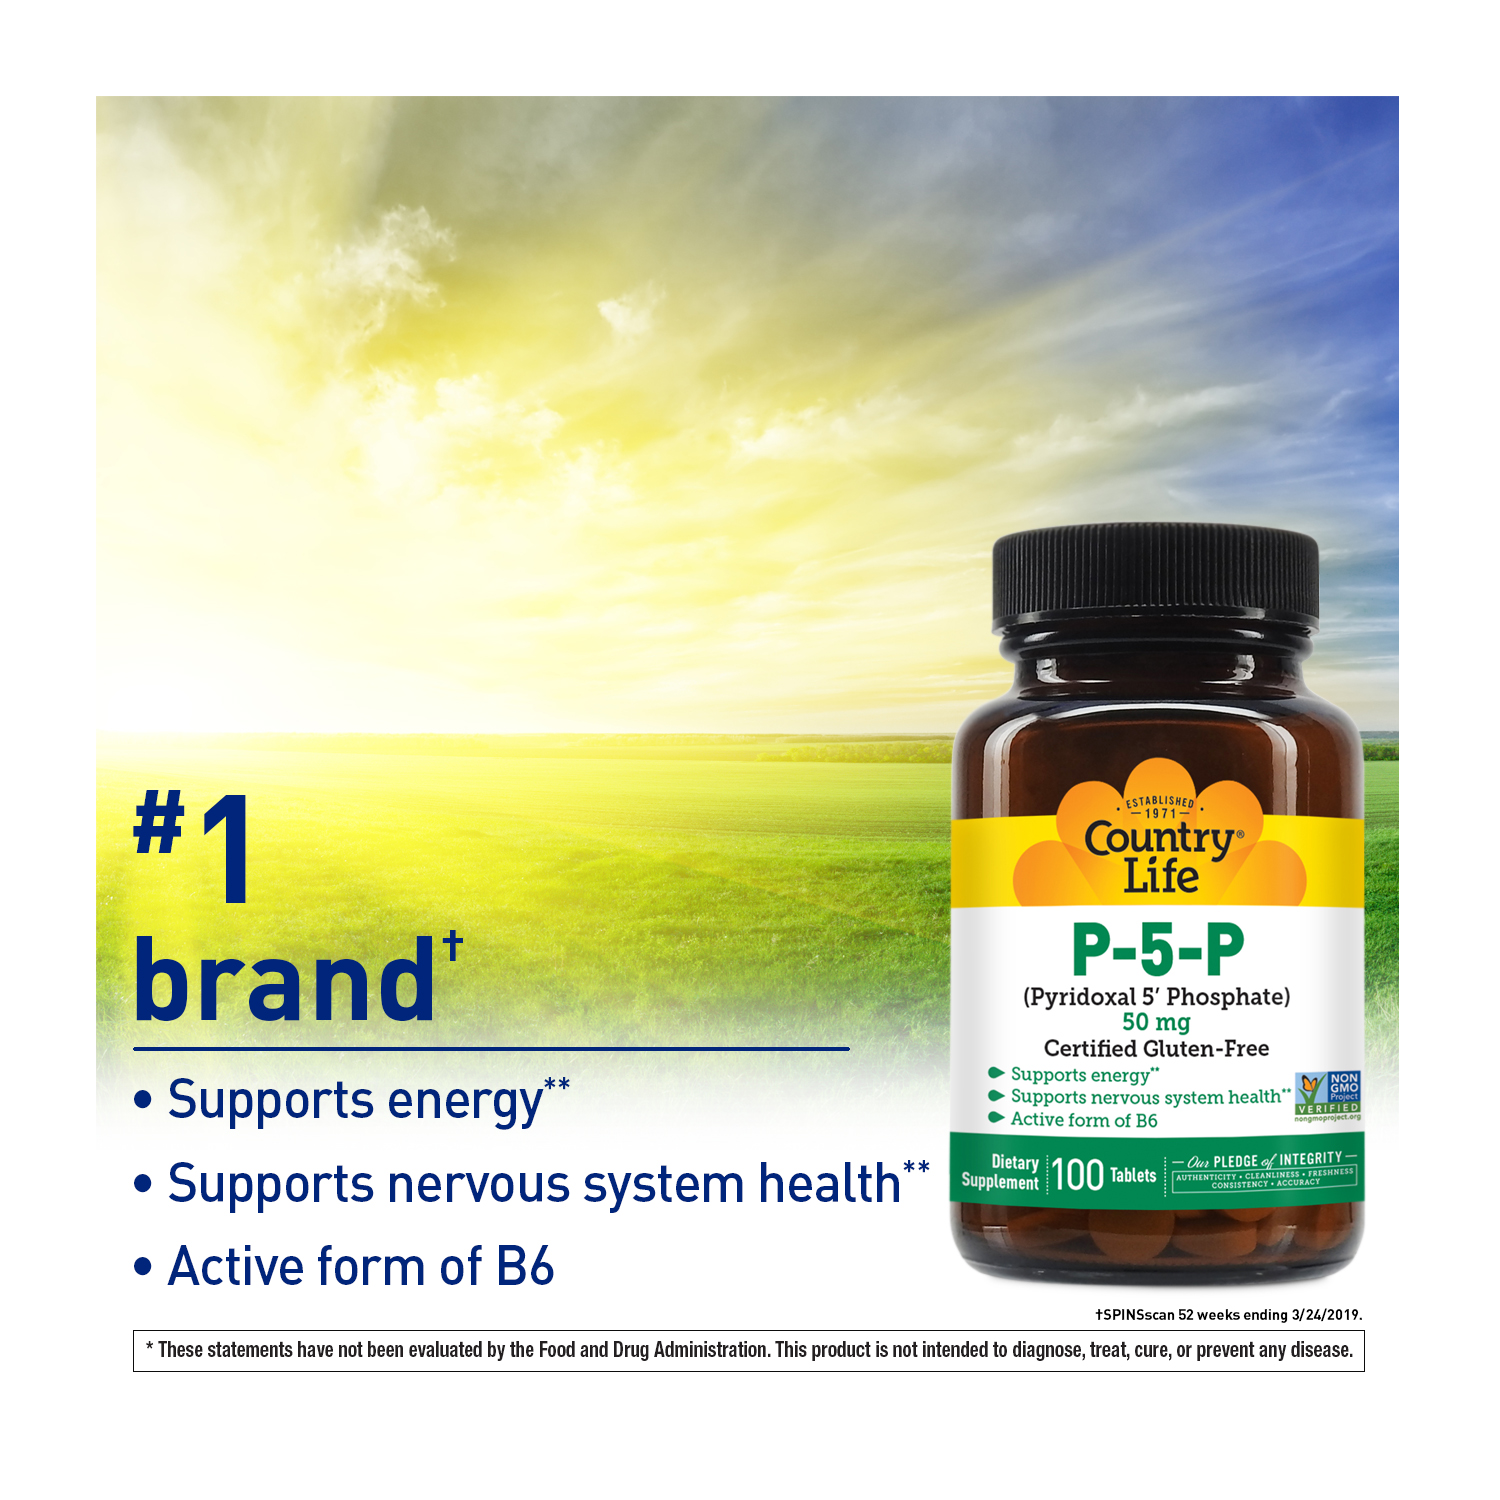 P-5-P Pyridoxal-5-Phosphate 50 mg